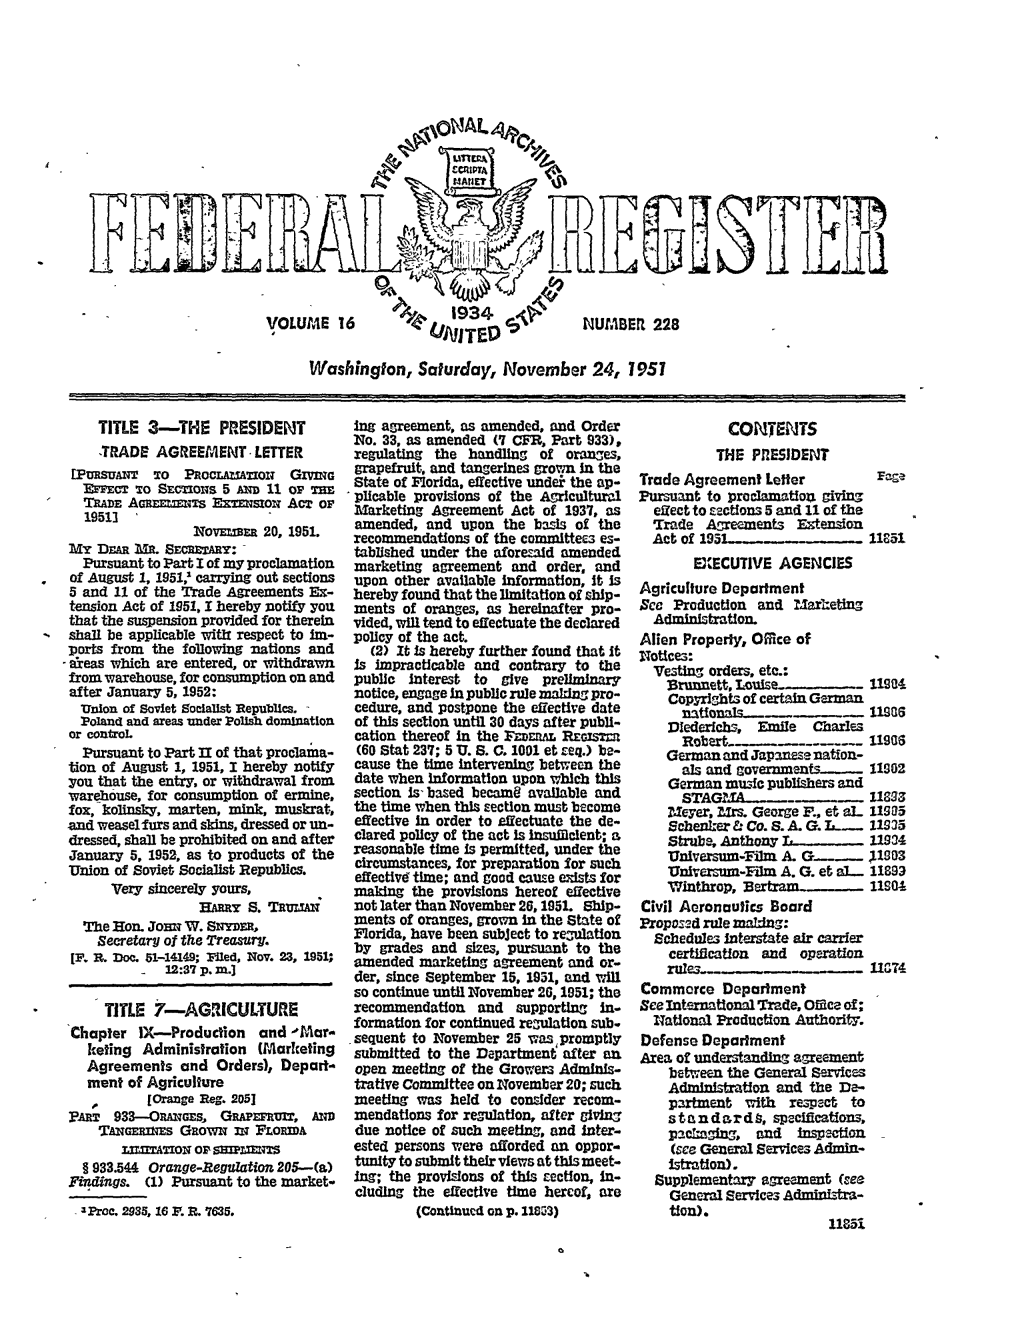 Federal Register: 16 Fed. Reg. 11851 (Nov. 24, 1951)